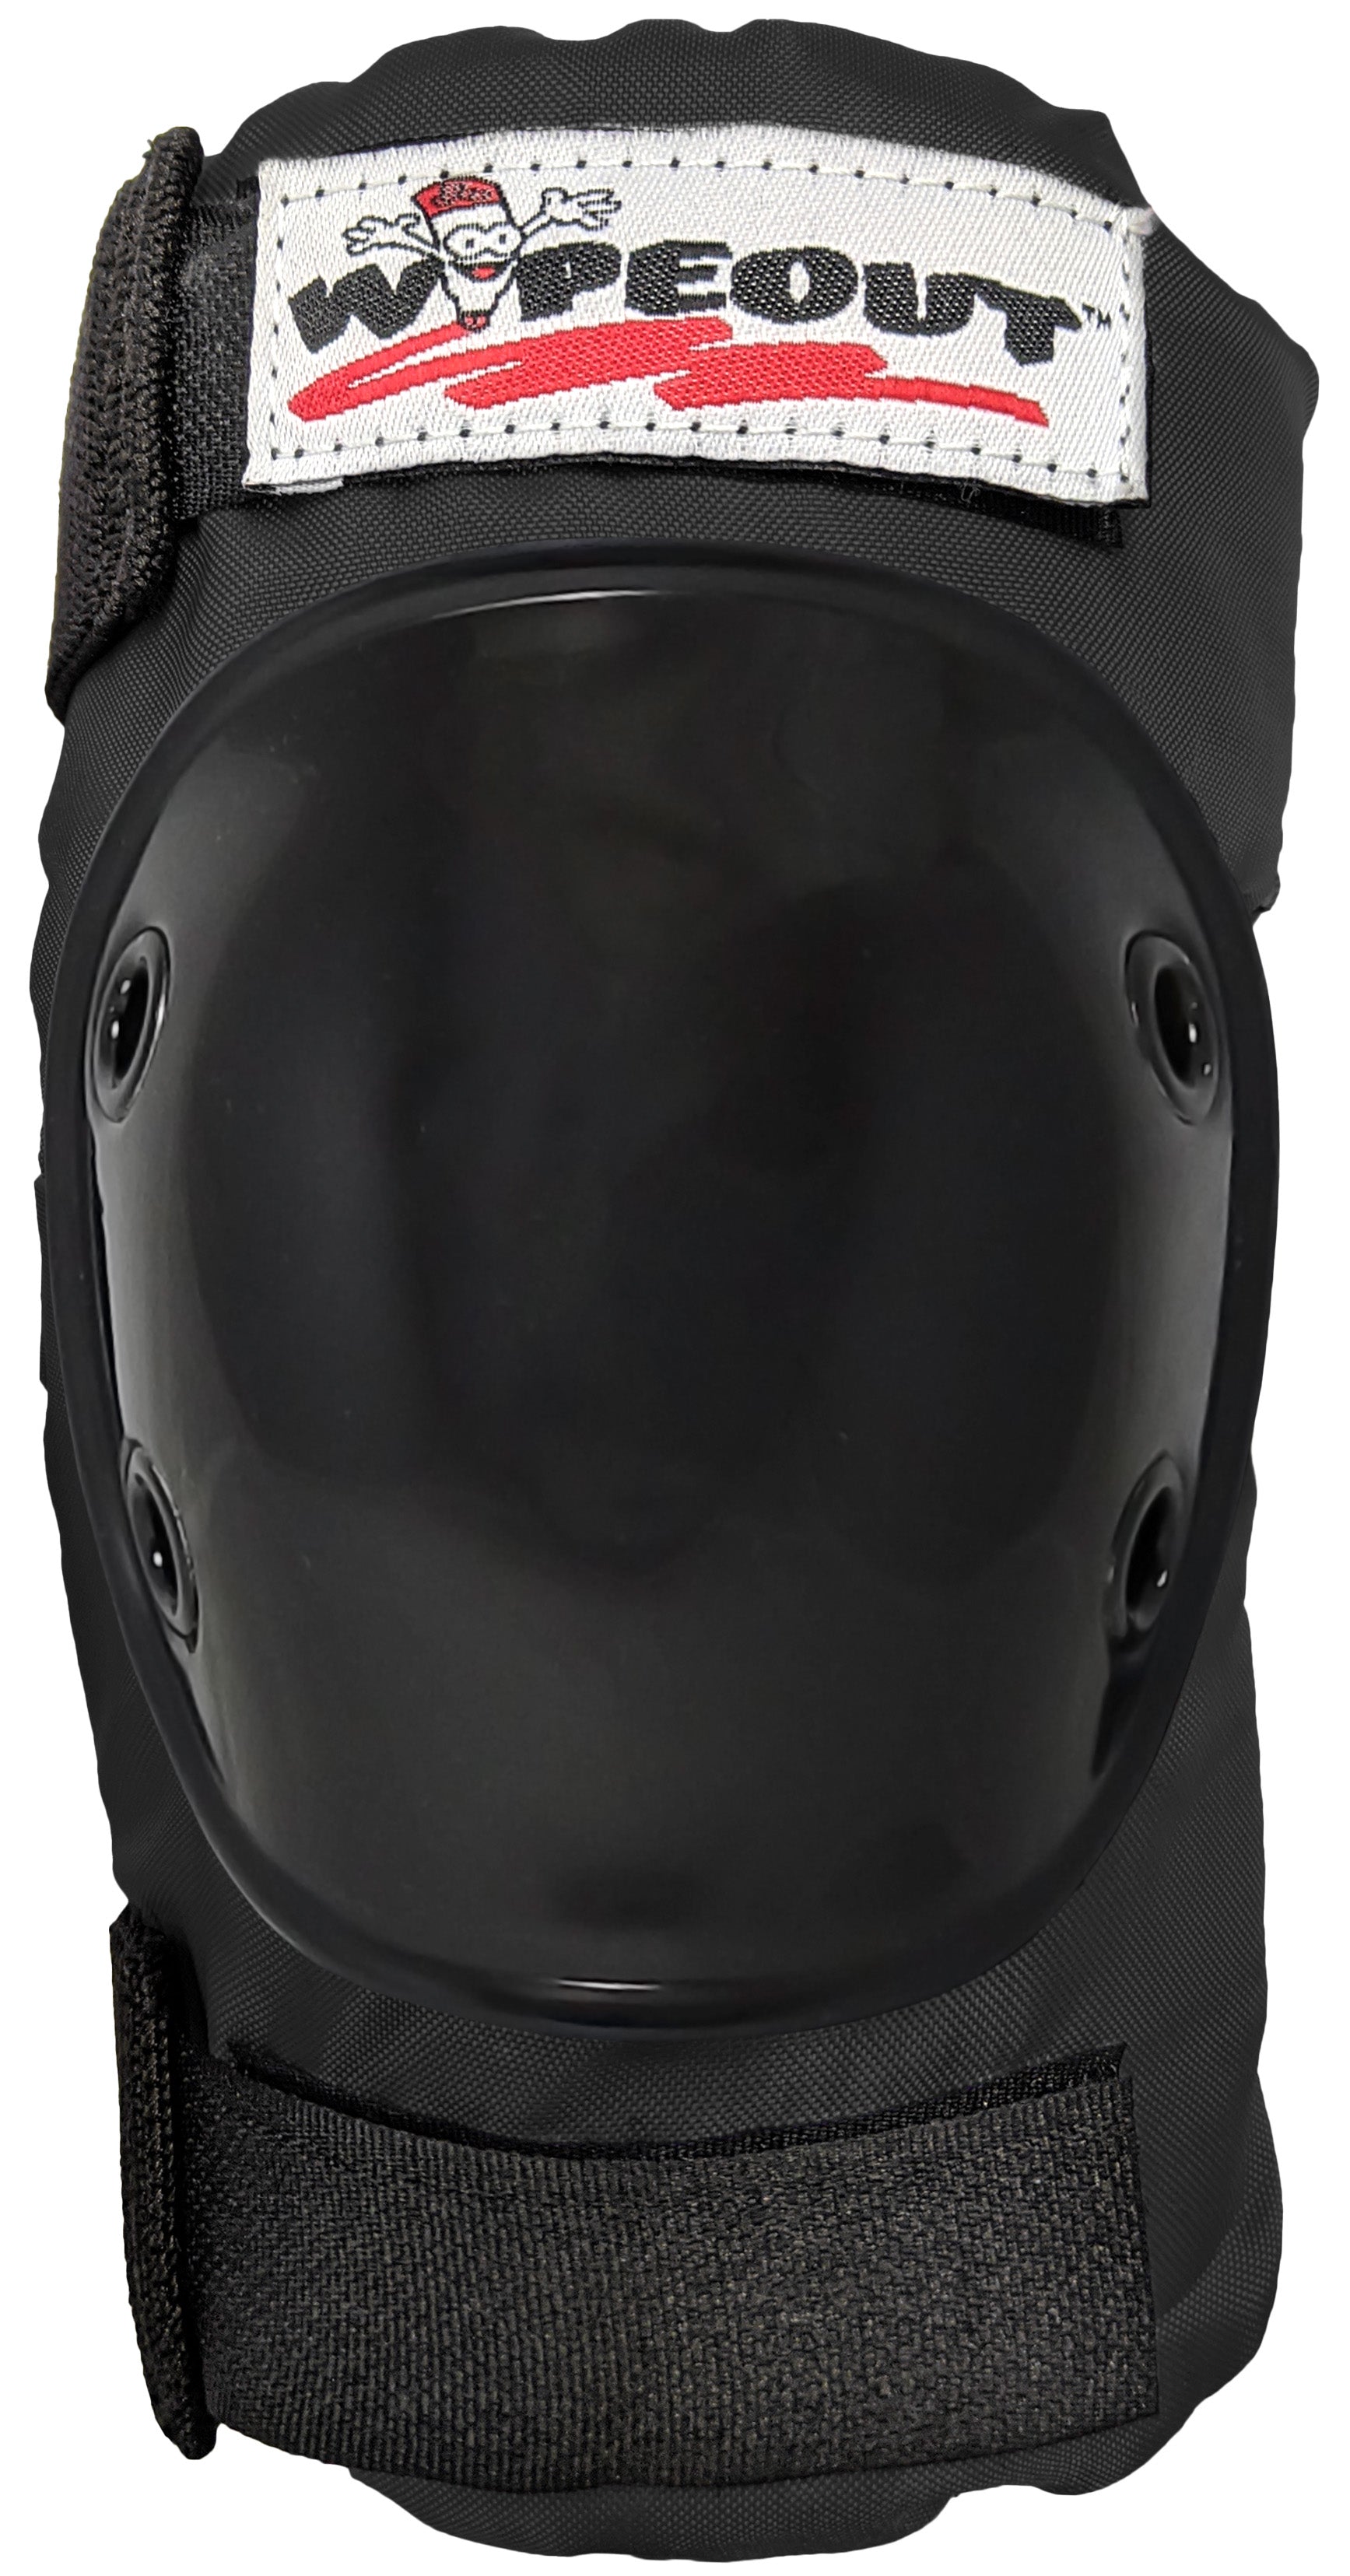 black protective knee pad